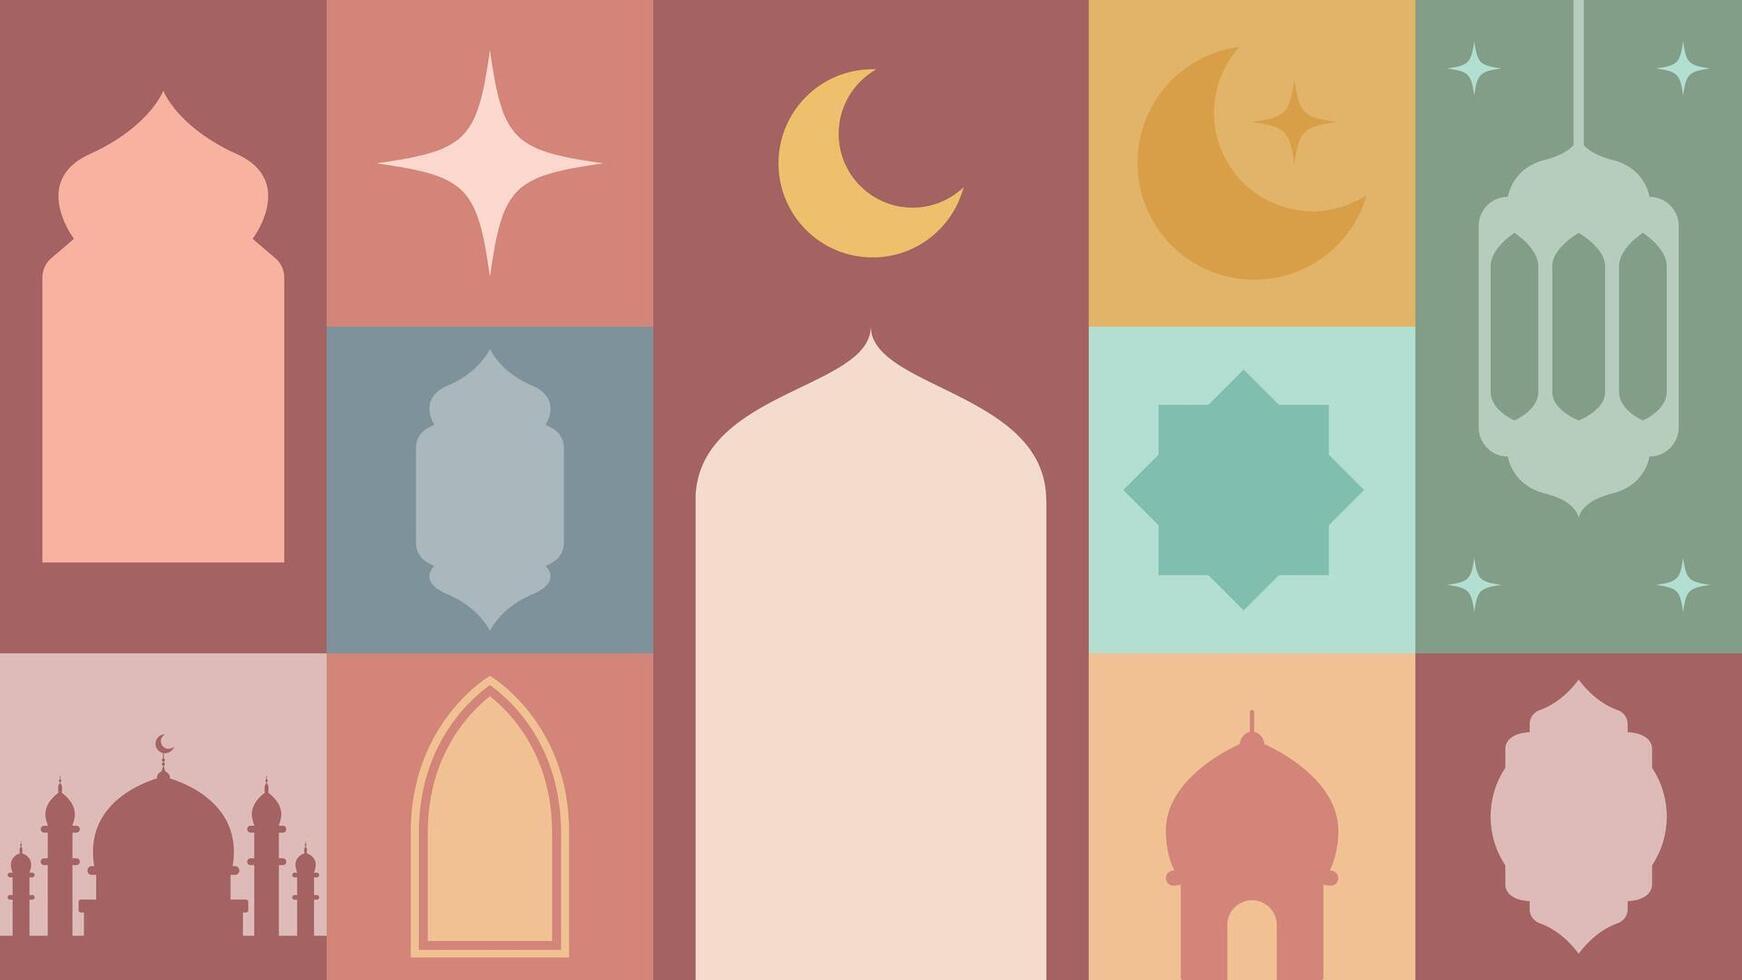 Ramadan kareem islamique salutation carte vecteur